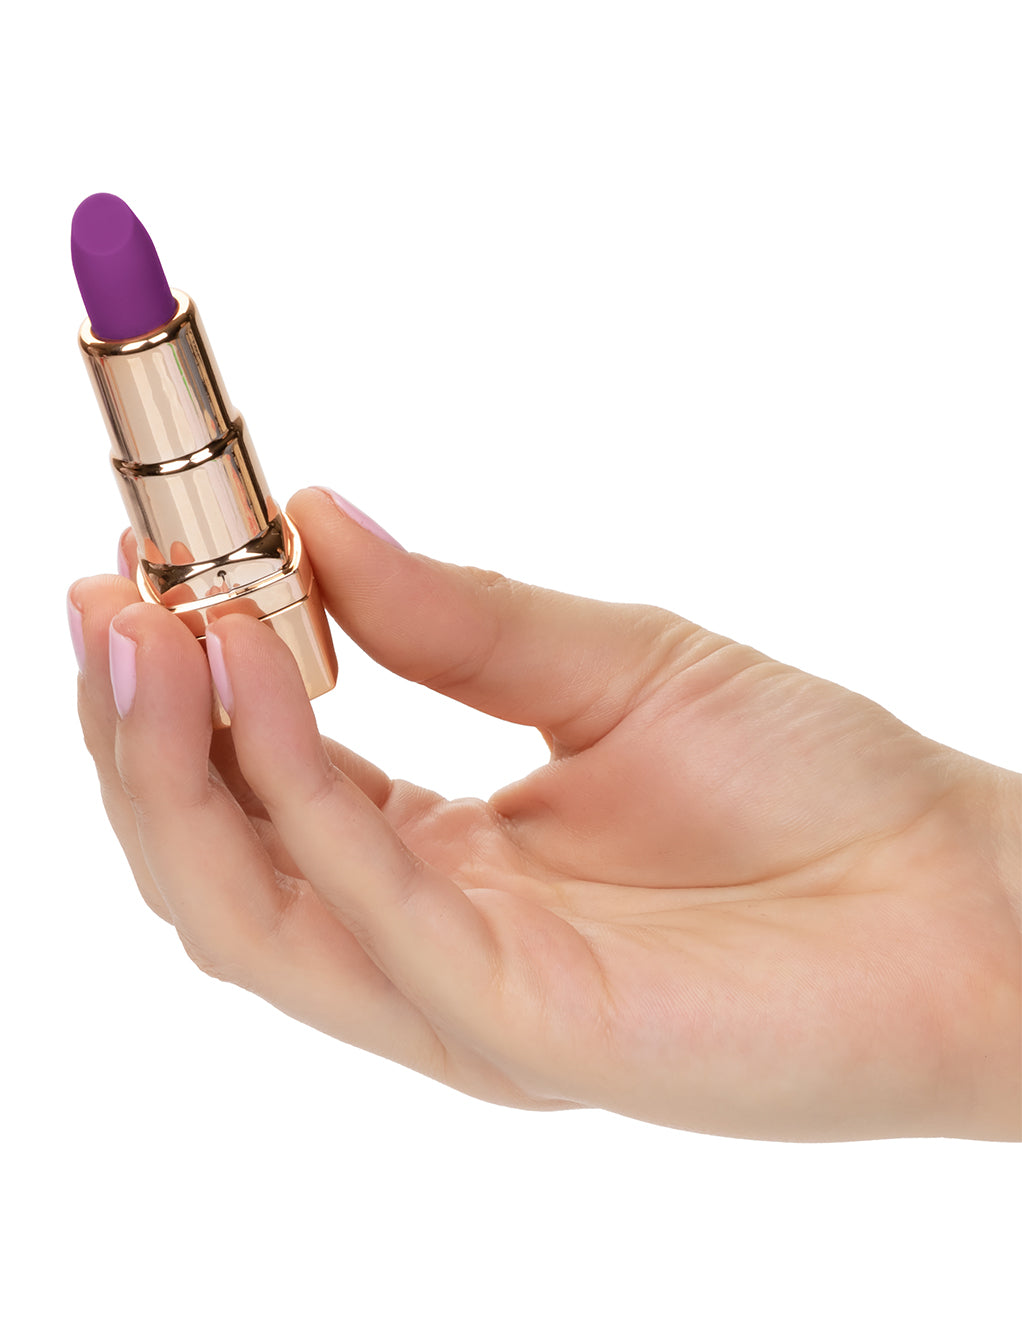 Naughty Bits Bad Bitch Lipstick Vibrator- in hand